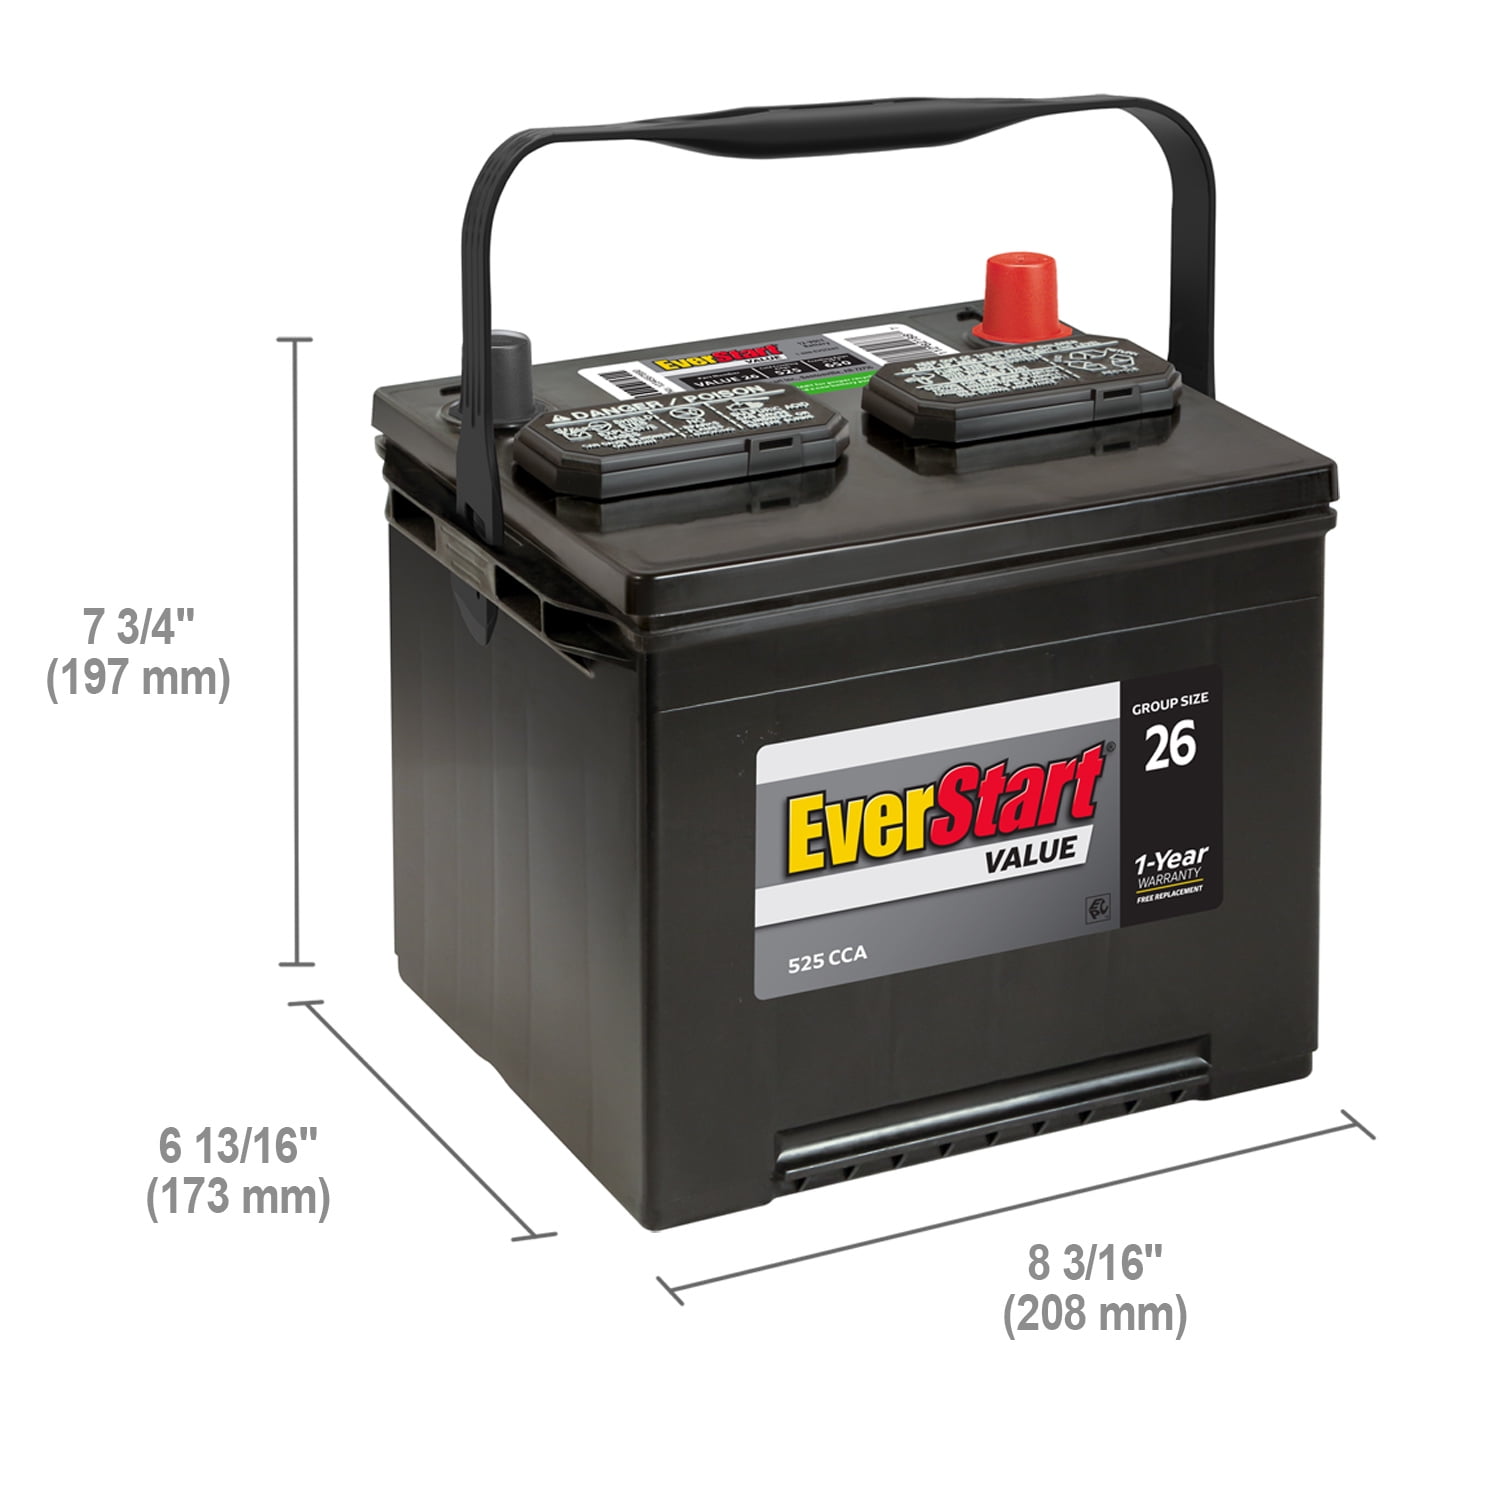 EverStart Value Lead Acid Automotive Battery, Group Size 26 (12 Volt / 525  CCA) 